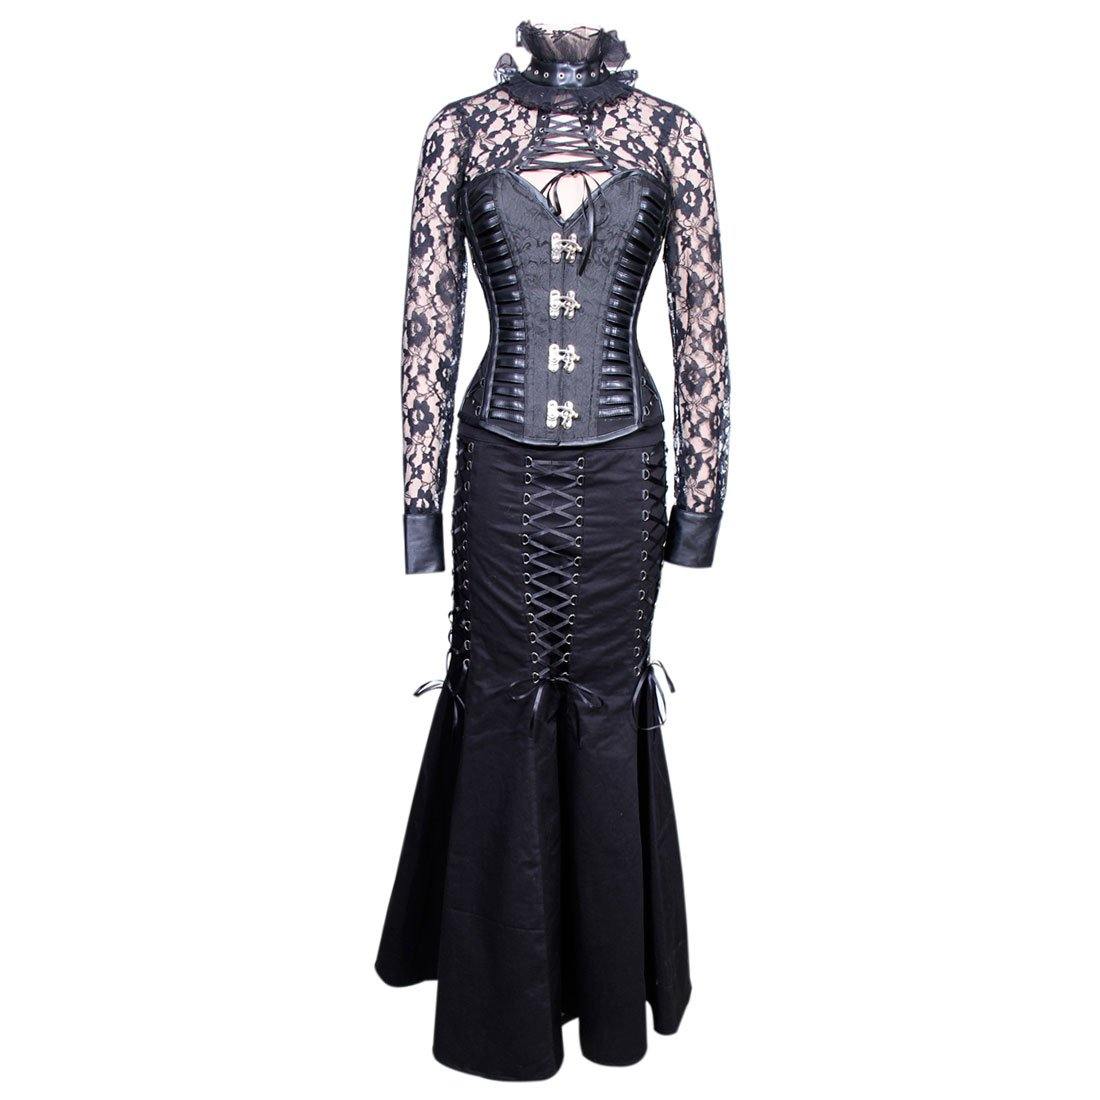 Jacinta Gothic Authentic Steel Boned Overbust Corset Dress - Corset Revolution